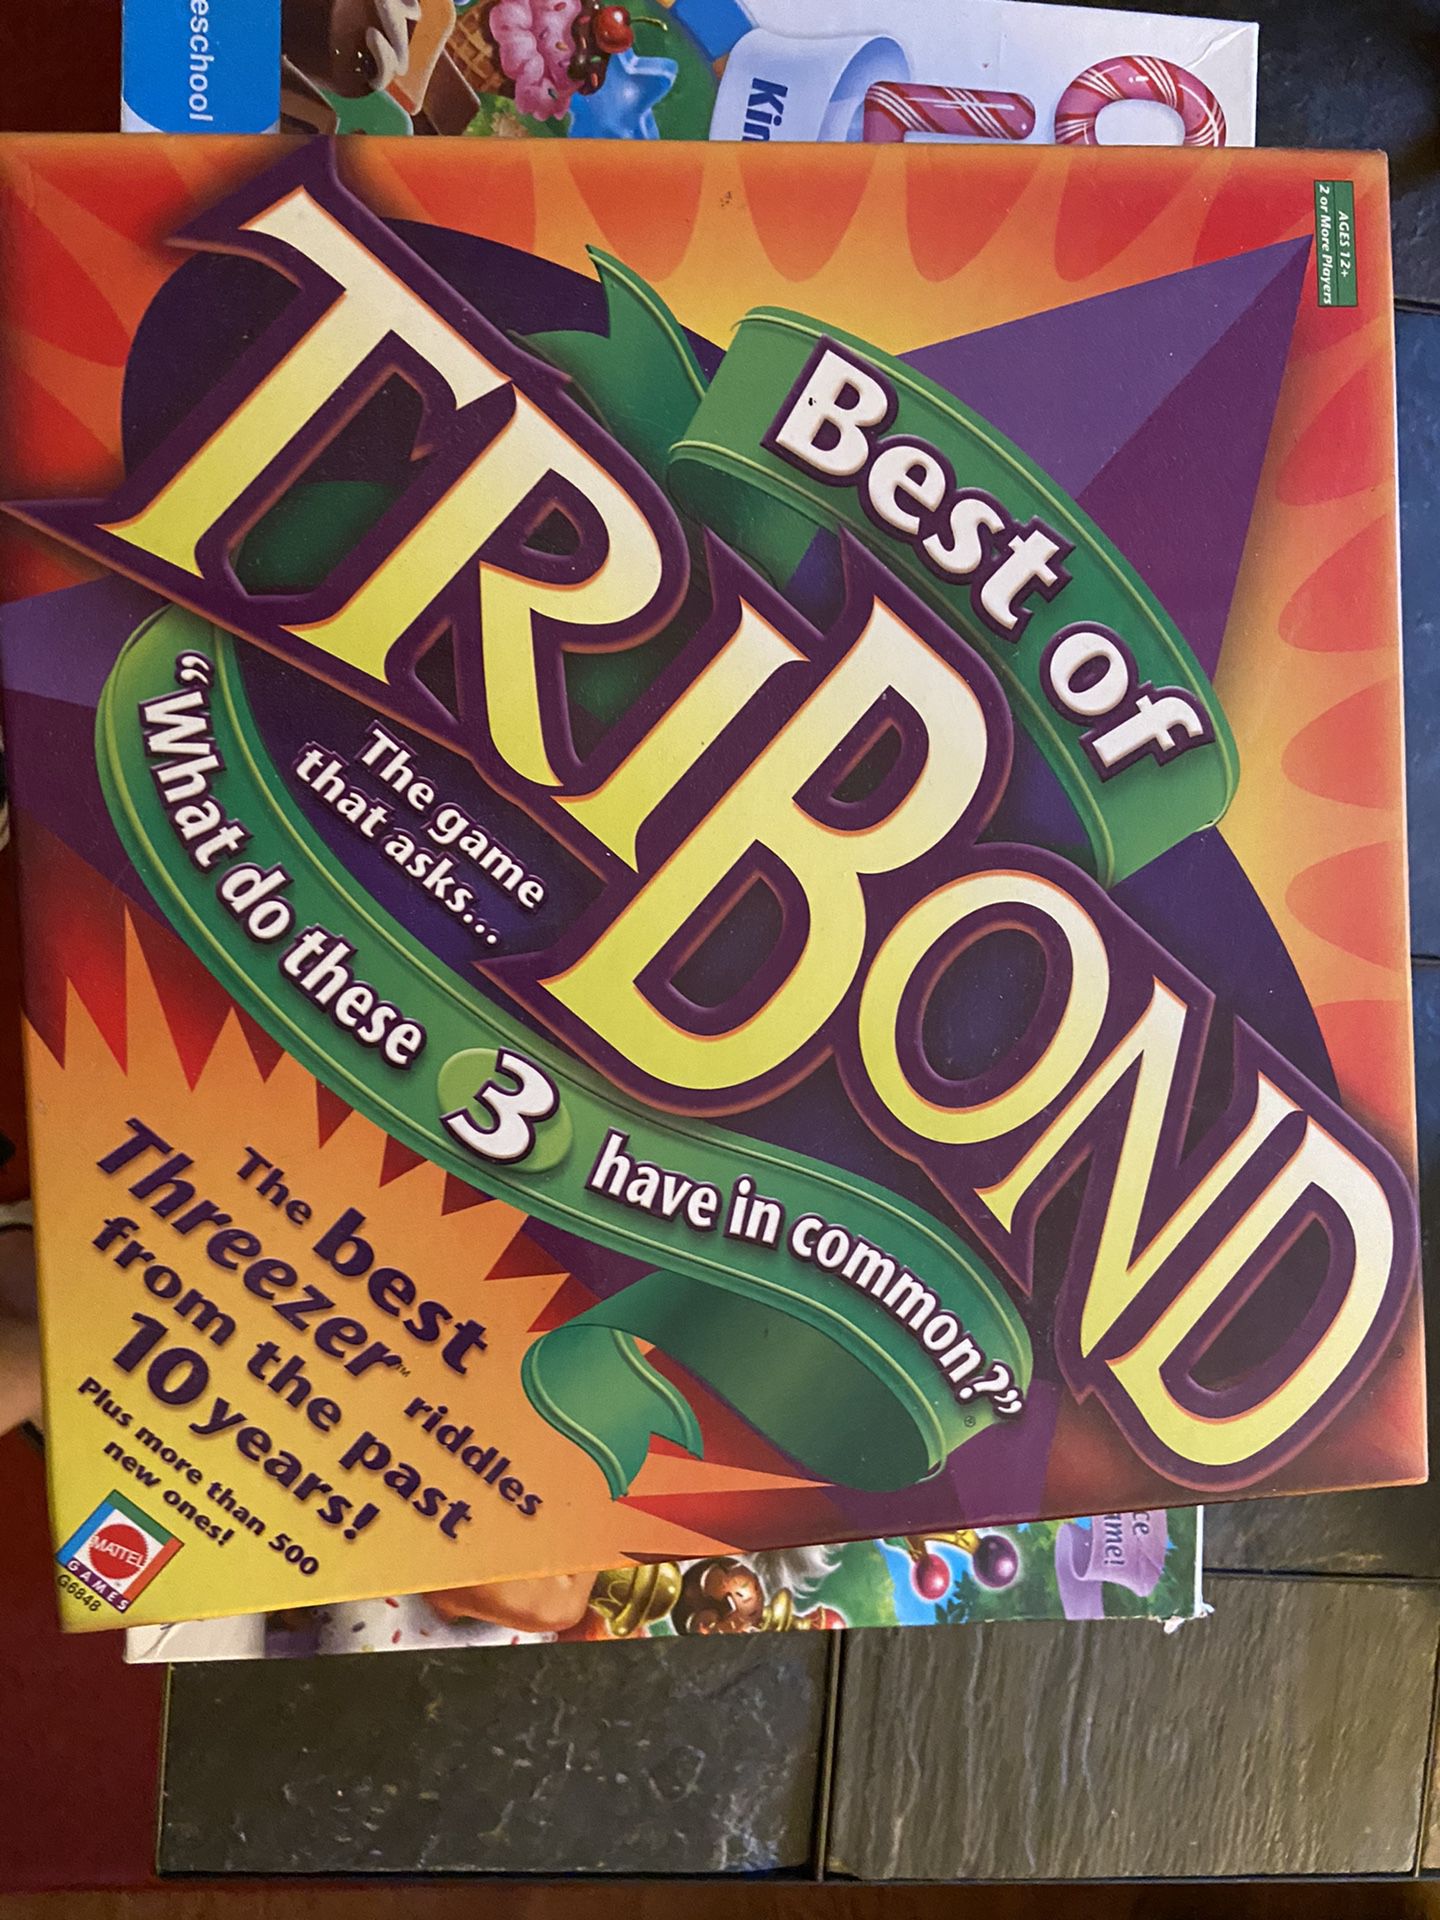 Tribond board game